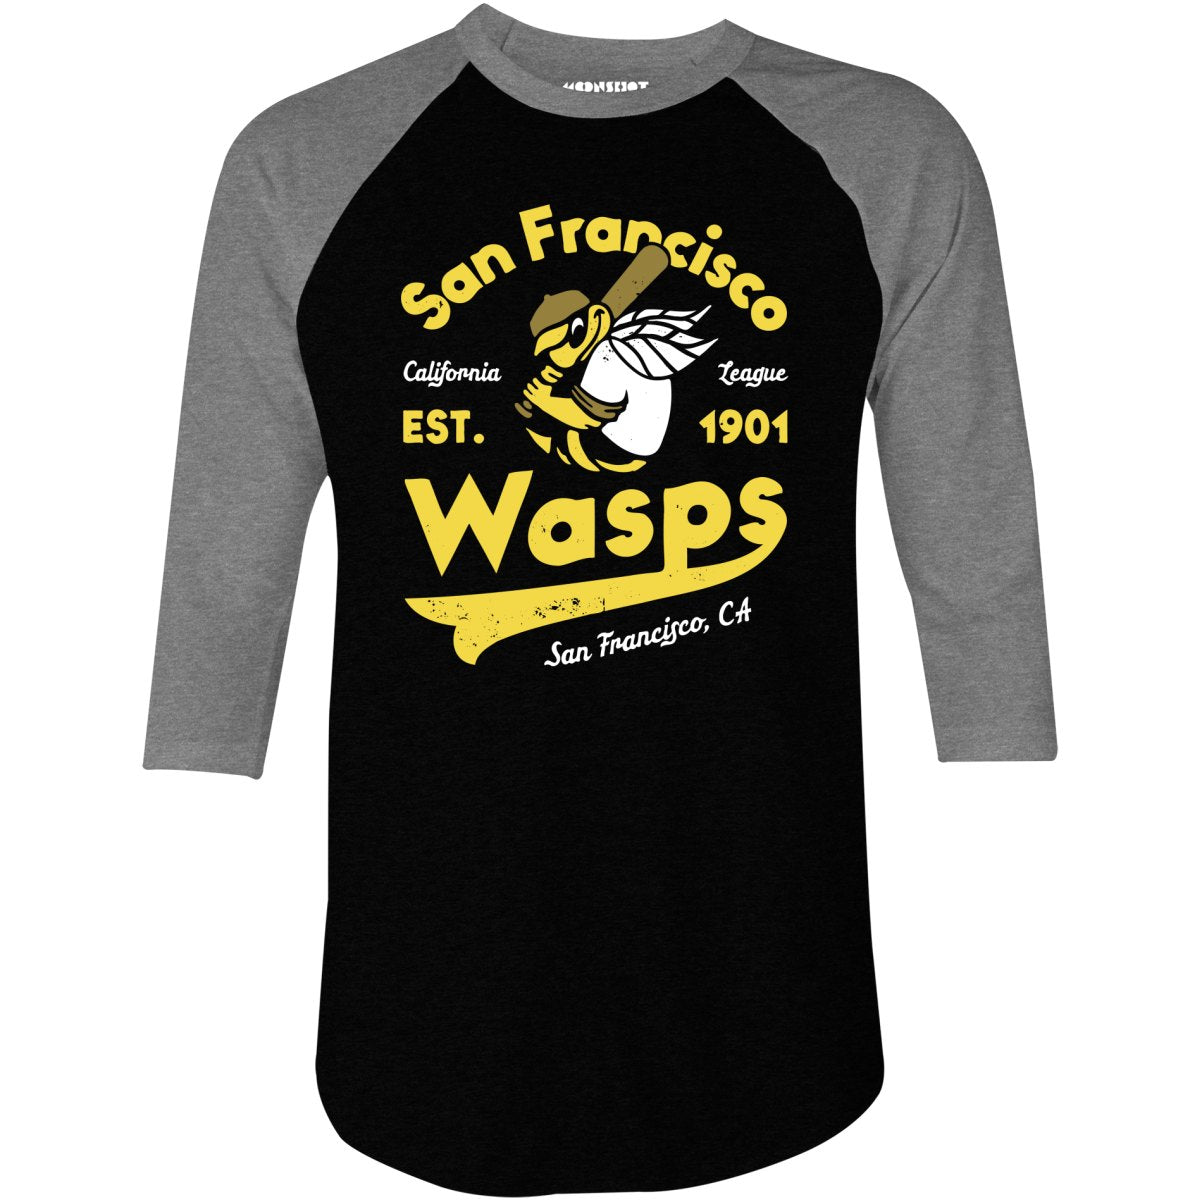 San Francisco Wasps - California - Vintage Defunct Baseball Teams - 3/4 Sleeve Raglan T-Shirt